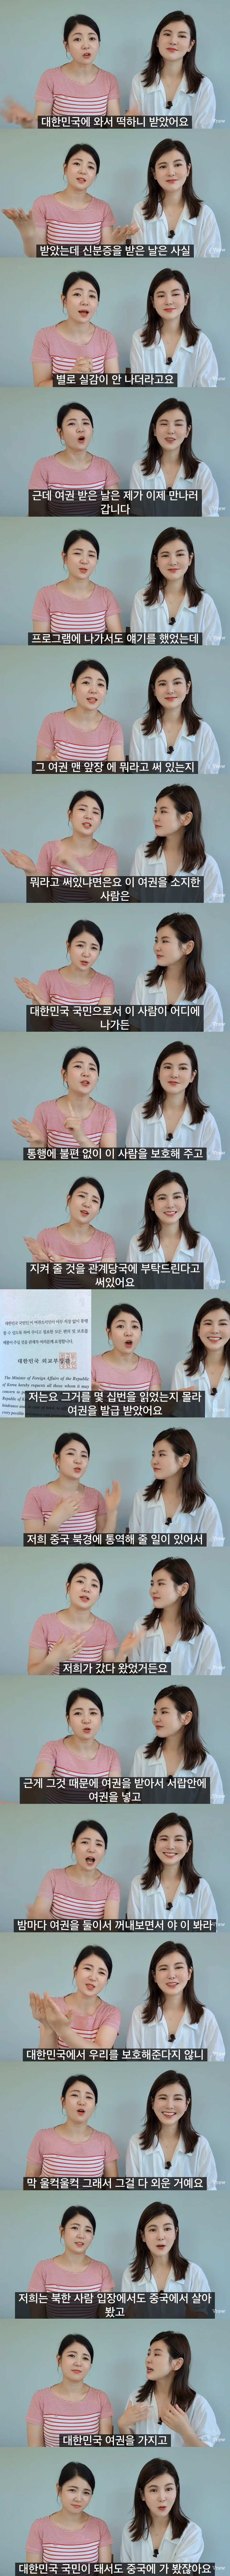 nIXXtT 탈북자 누나들이 한국 국적얻고 한국인임을 자랑스럽게 만든 한국 여권의 문구....JPG